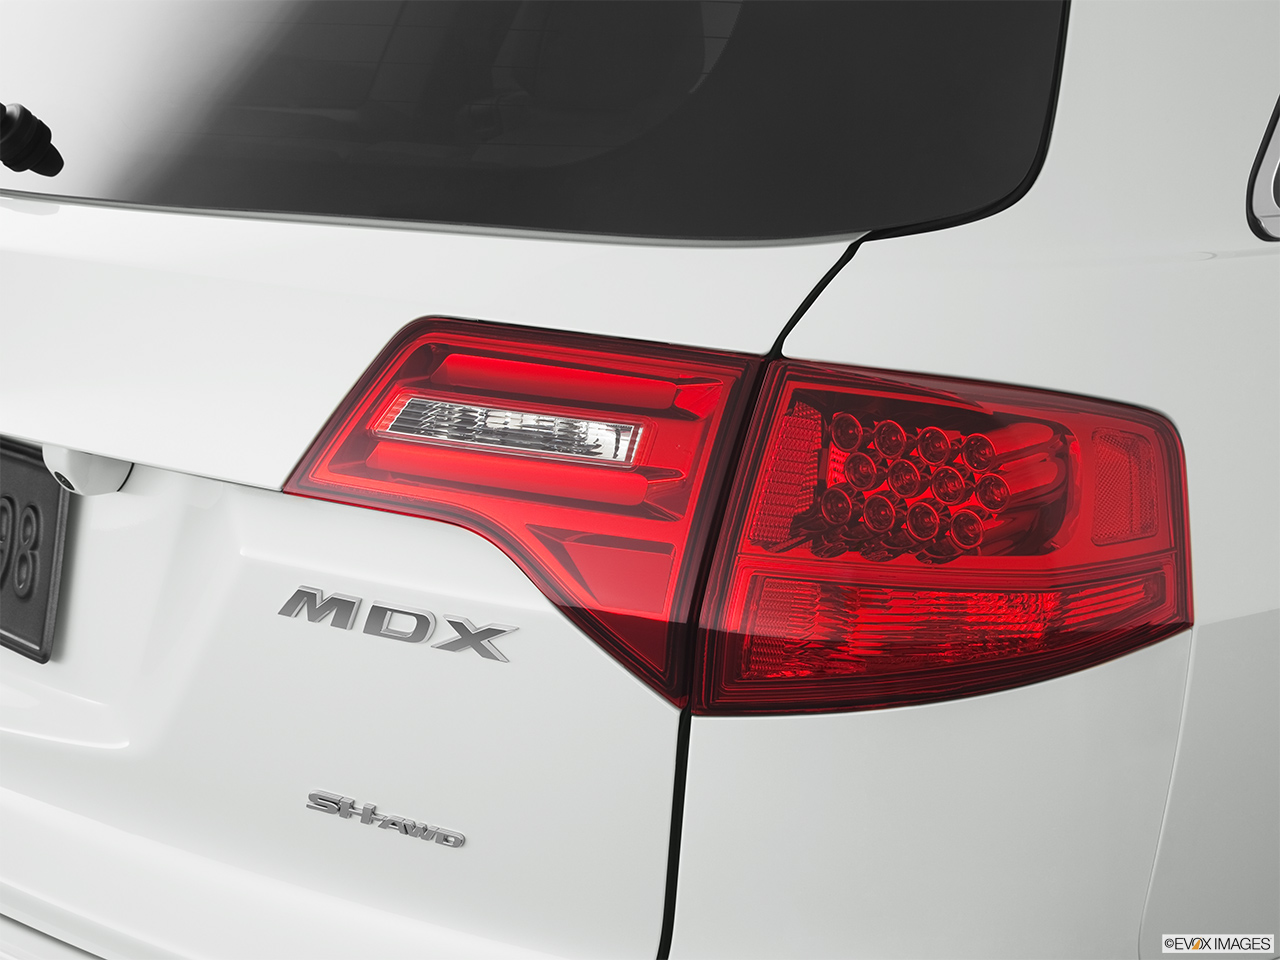 2011 Acura MDX MDX Passenger Side Taillight. 